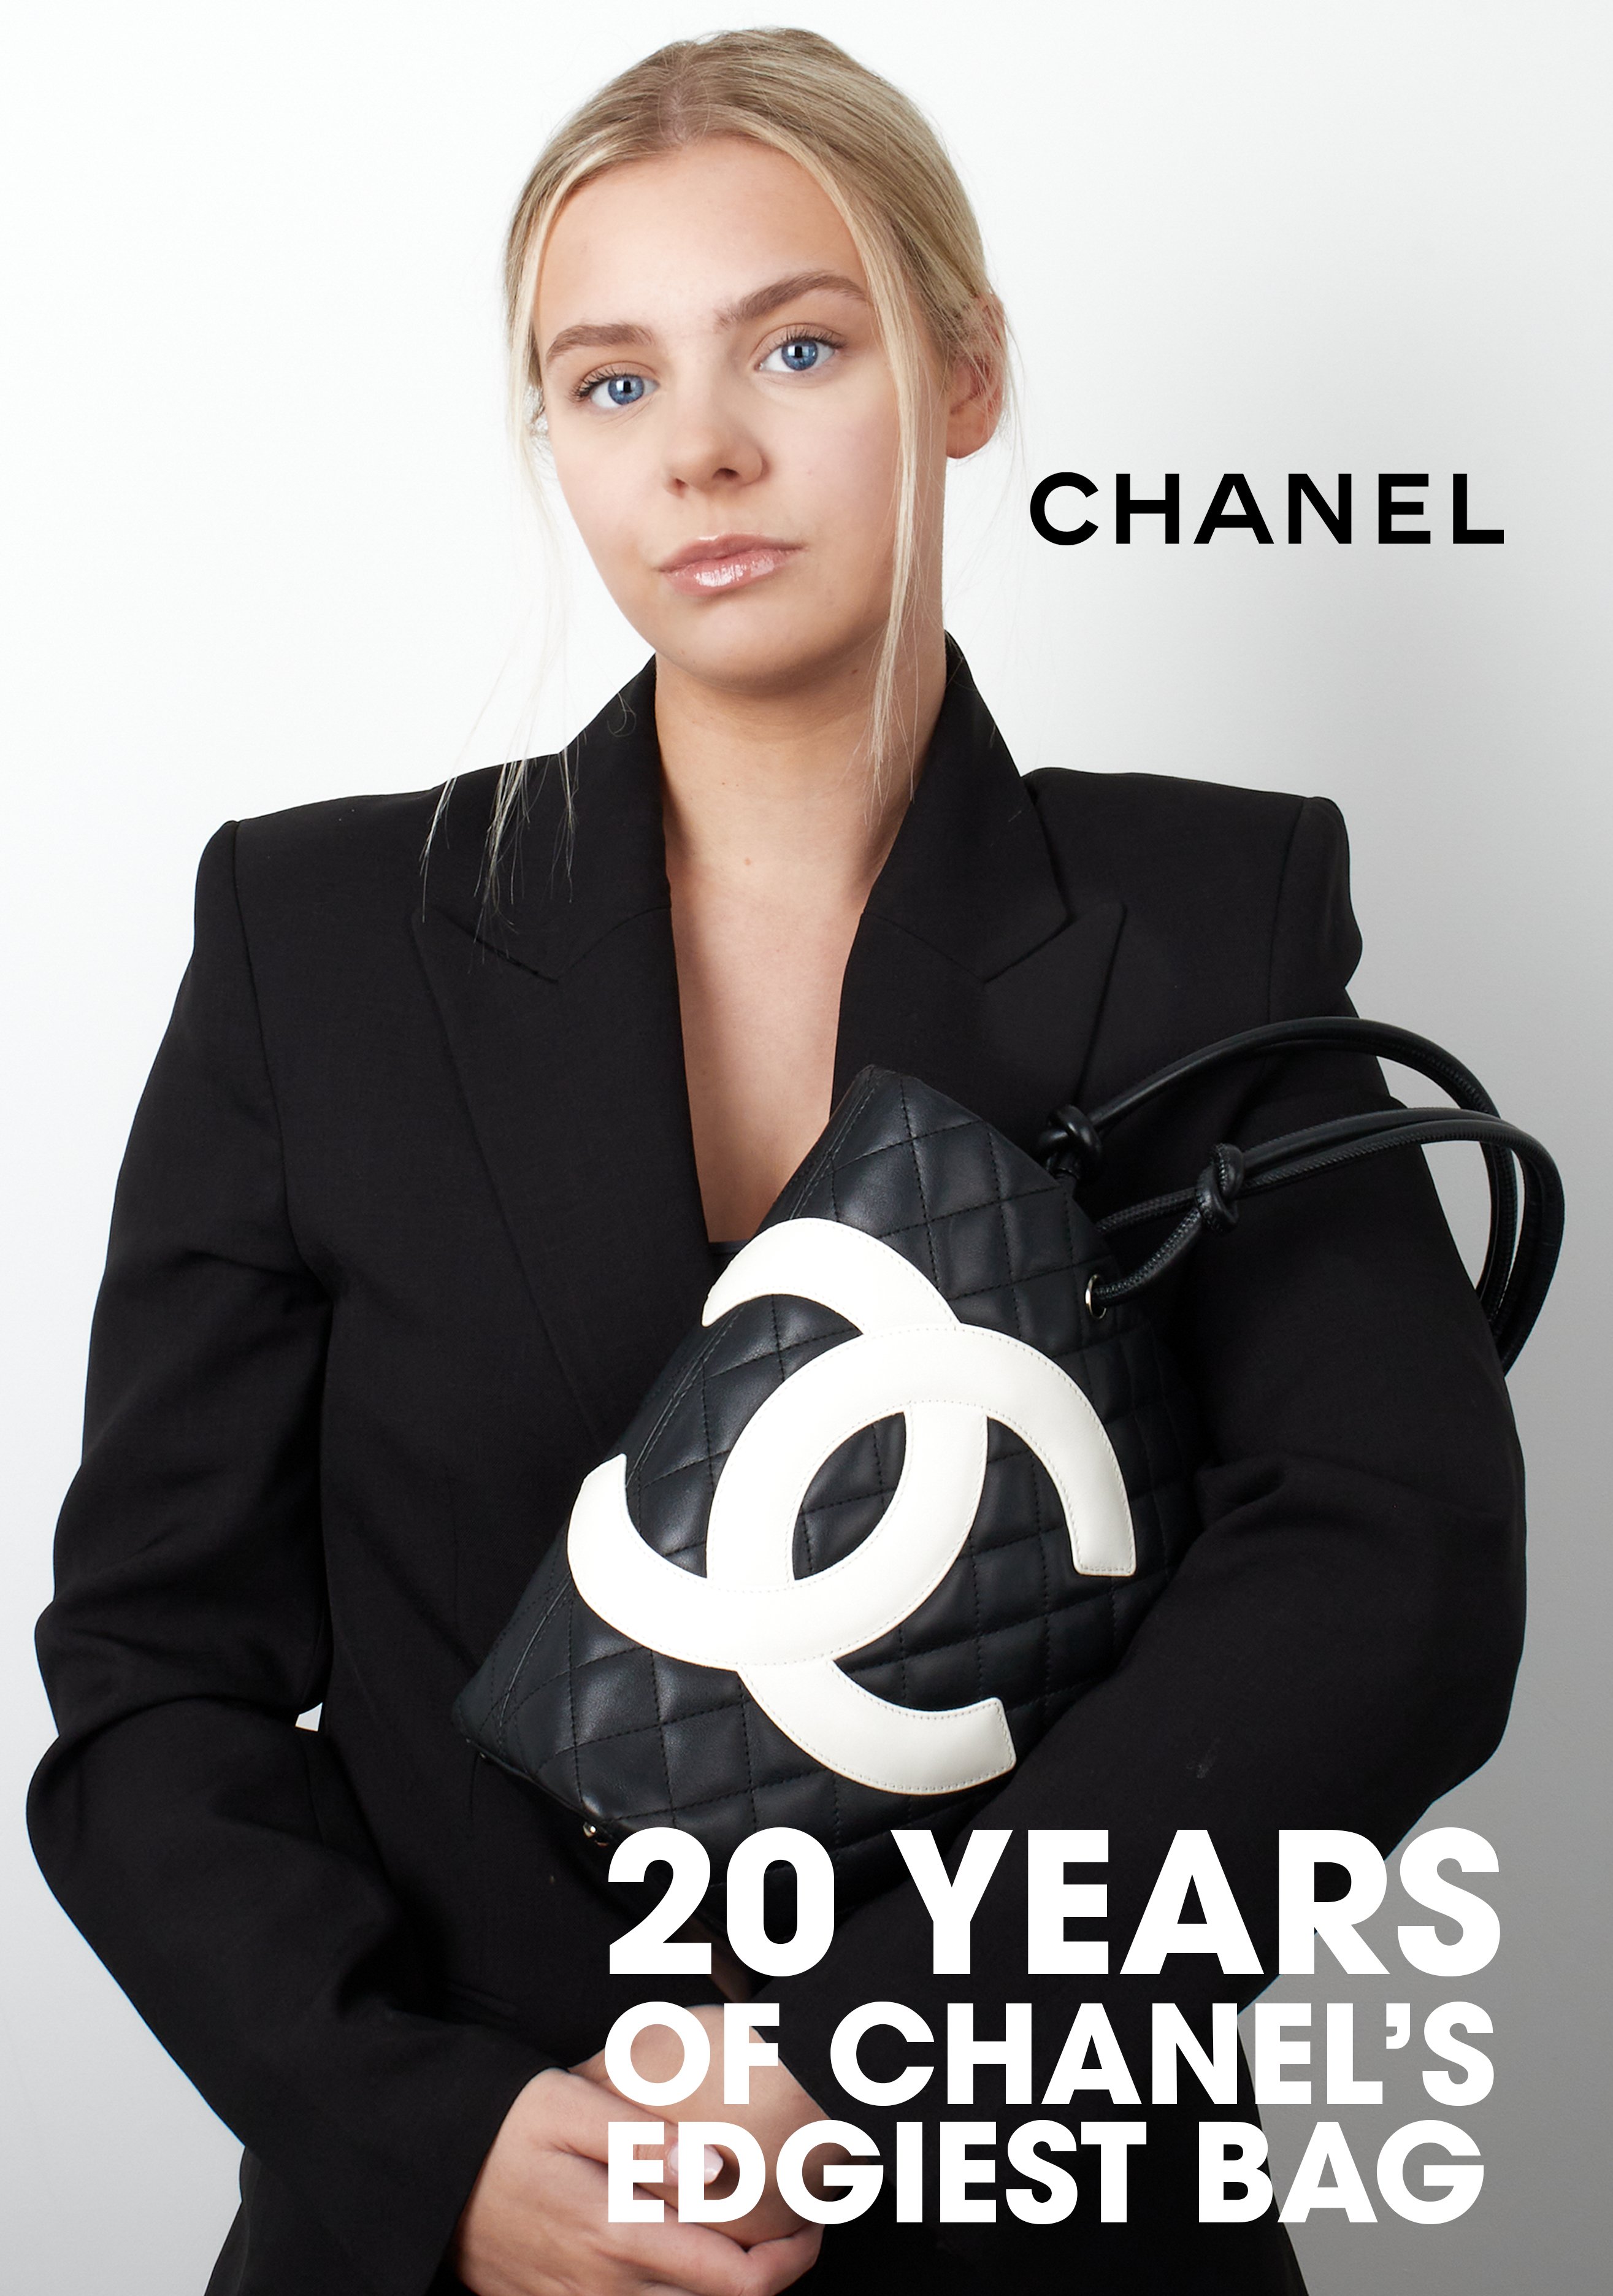 Chanel's edgiest bag turns 20!